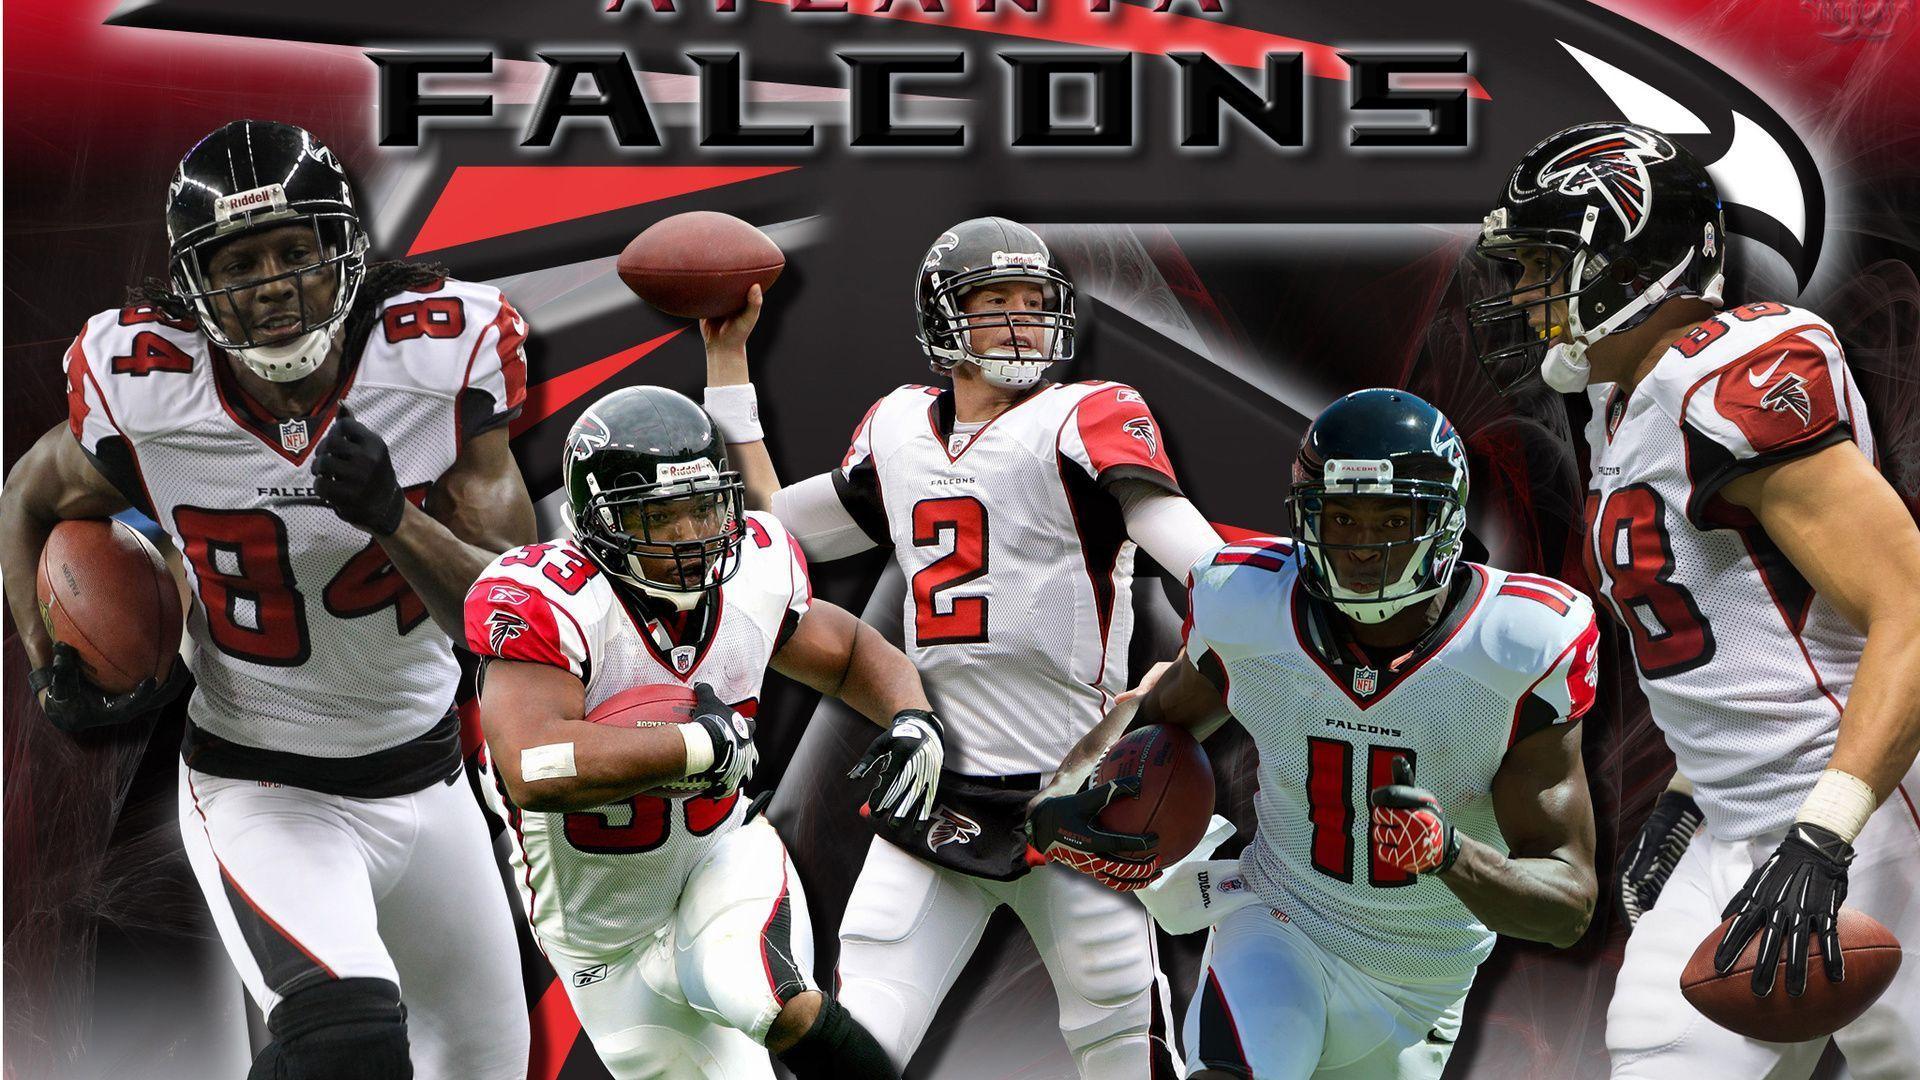 Nfl, Atlanta Falcons Nfl Team Players Poster, Sports